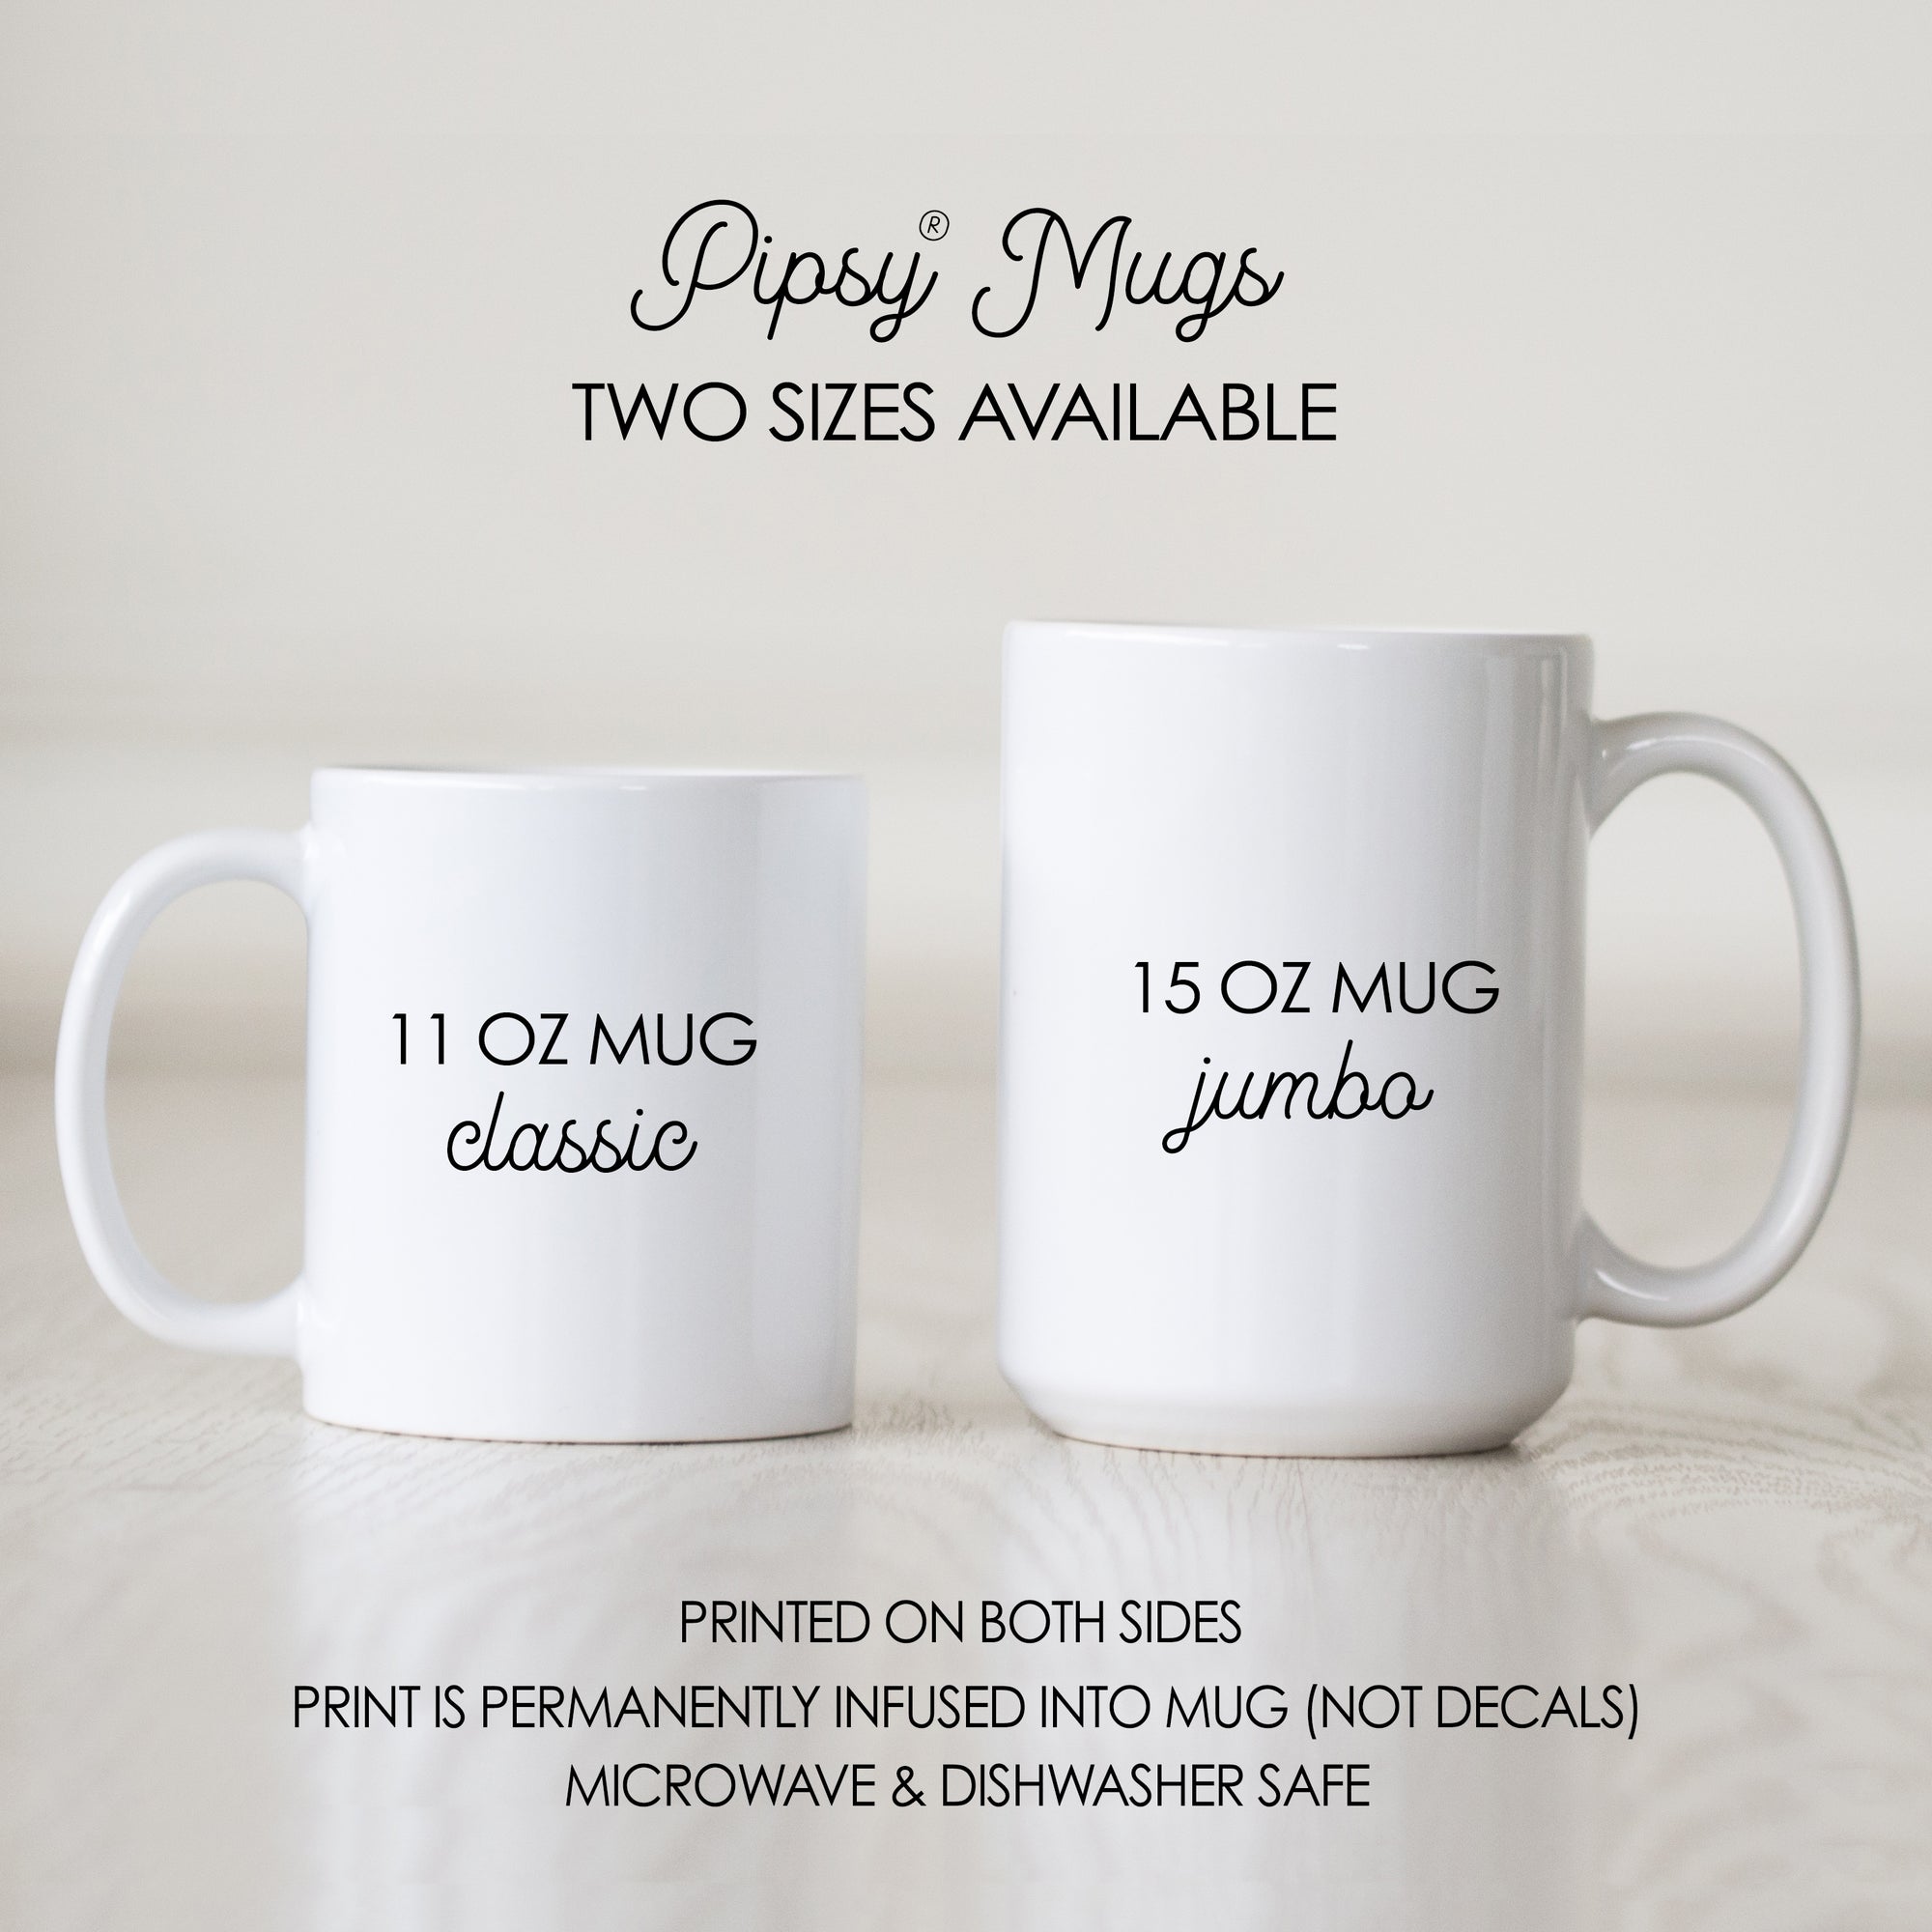 Pipsy Mug Sizes, 11 ounce (standard) or 15 ounce (jumbo)